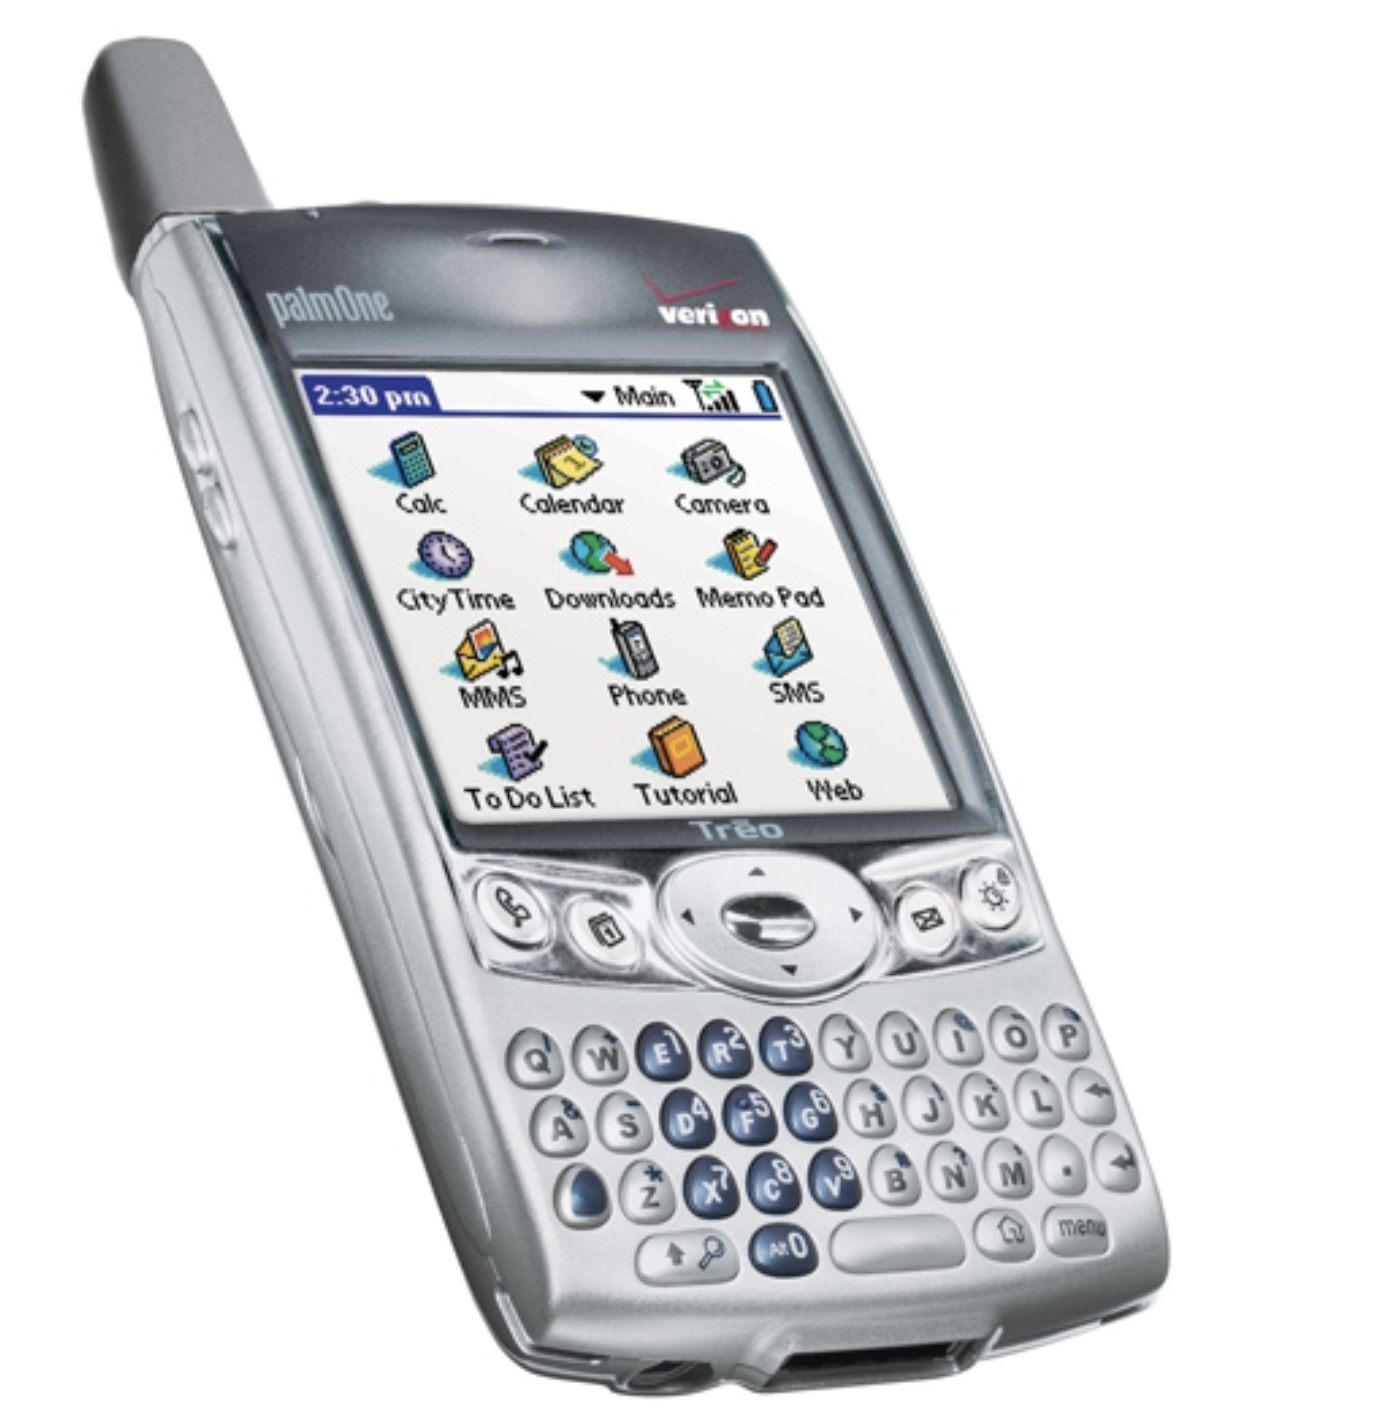 Сотовый телефон 2000. Palm treo 600. Palm treo 600 (2003 год). Palm treo 650. Sony Ericsson коммуникатор 2003 года.